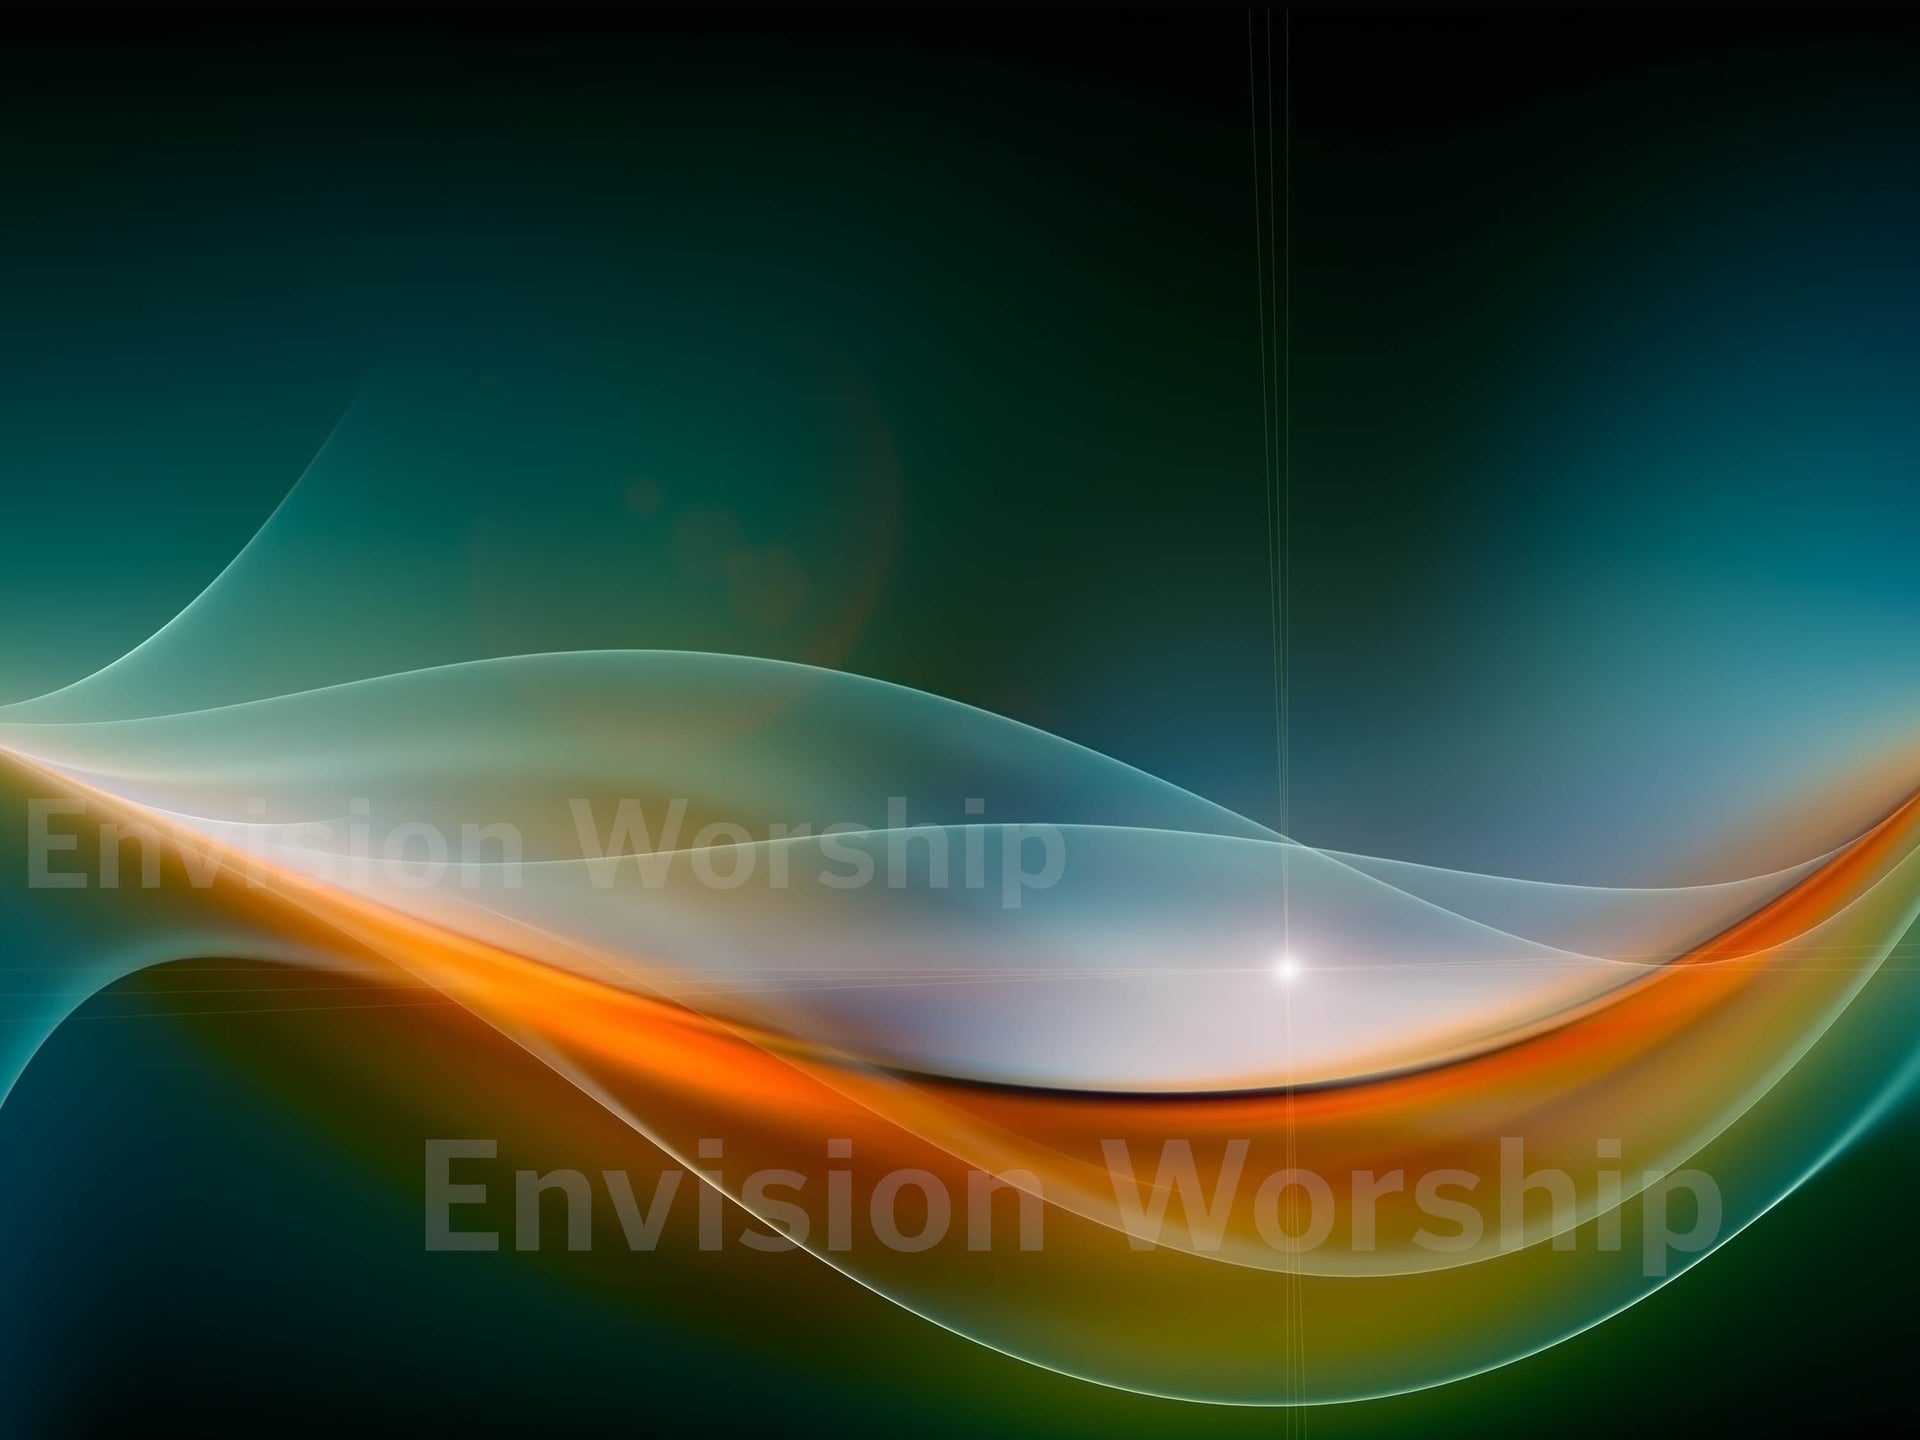 Holy Spirit and Christ worship slide